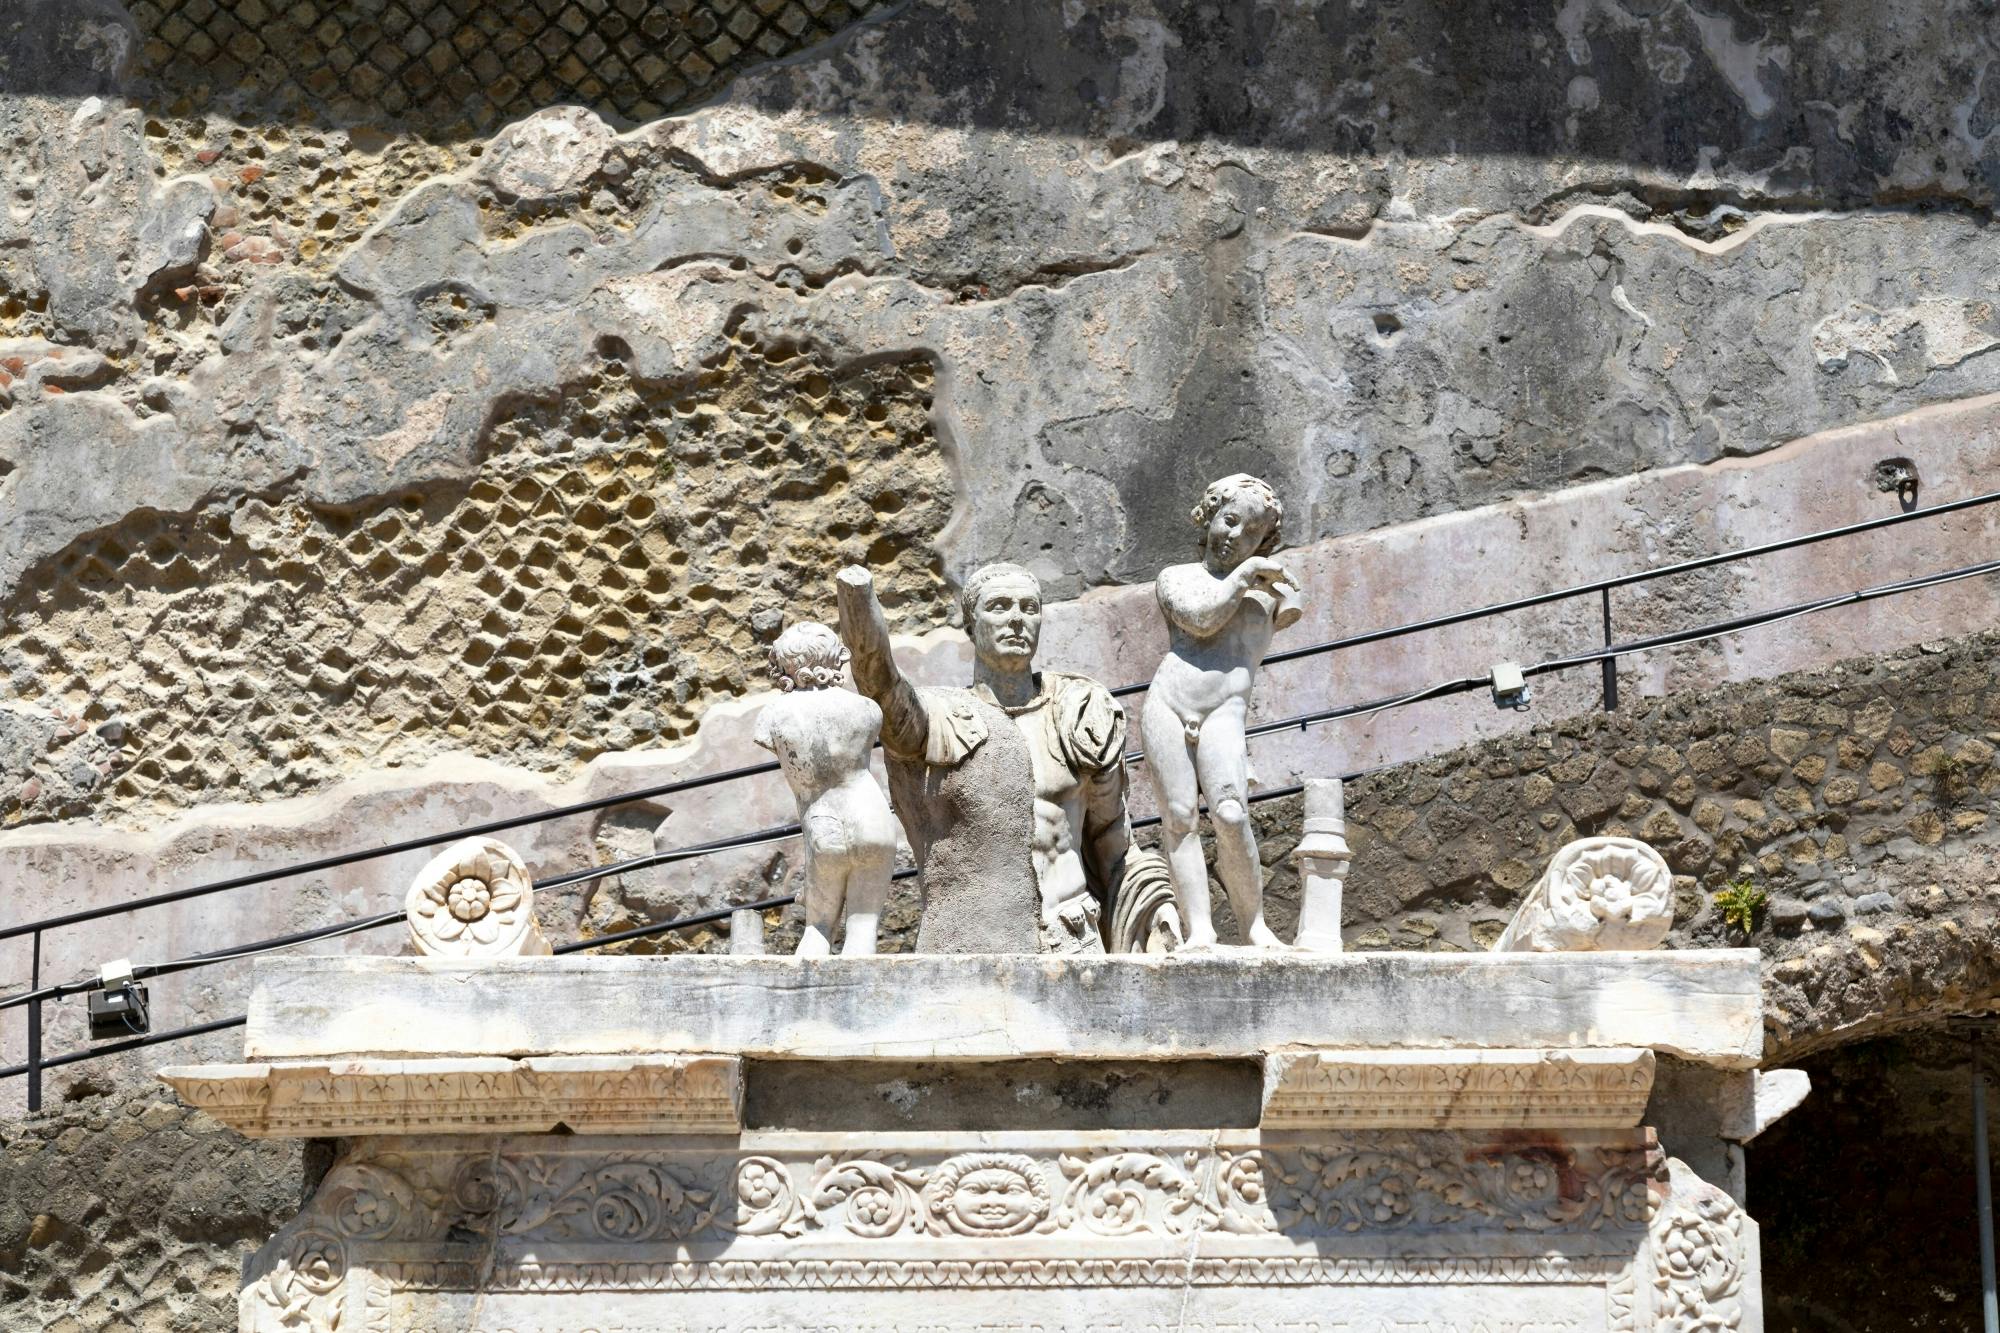 Herculaneum Half-Day Tour